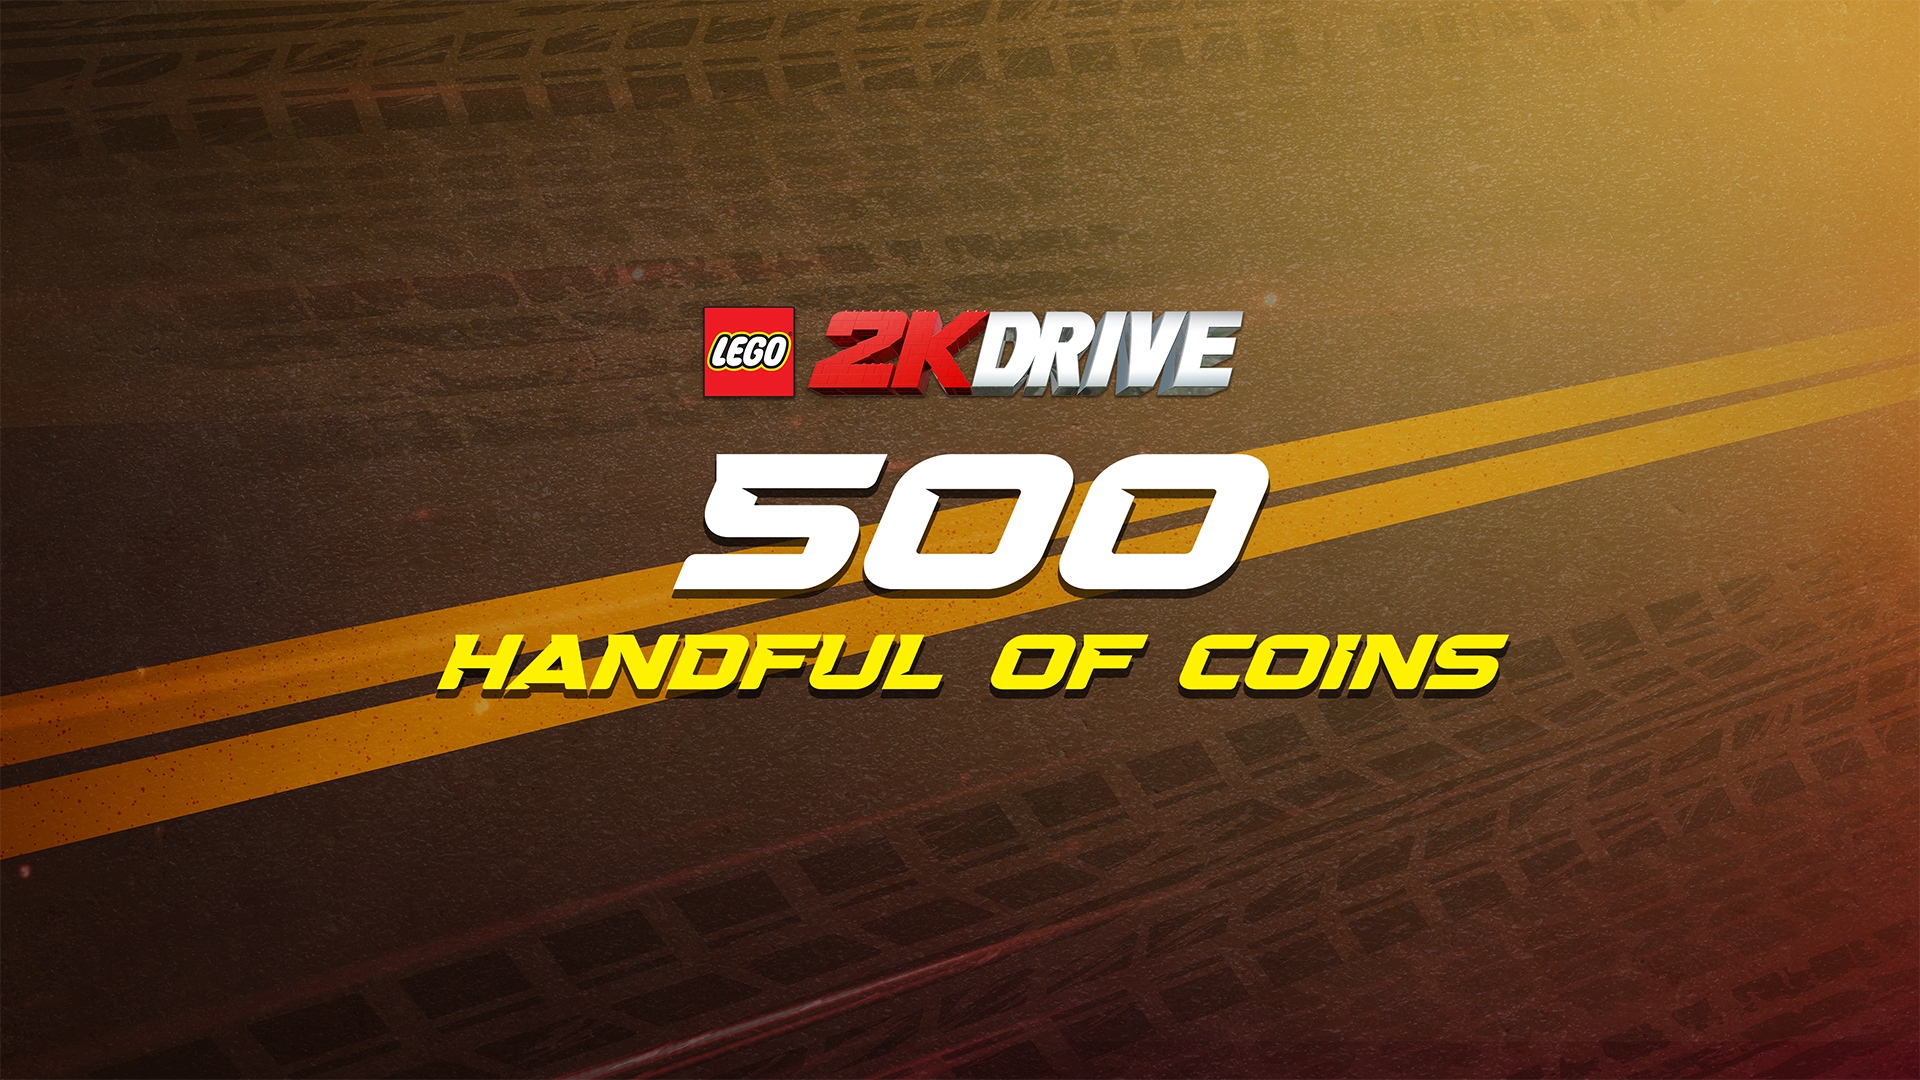 LEGO 2K Drive - Handful of Coins XBOX One / Xbox Series X|S CD Key 5.19 $